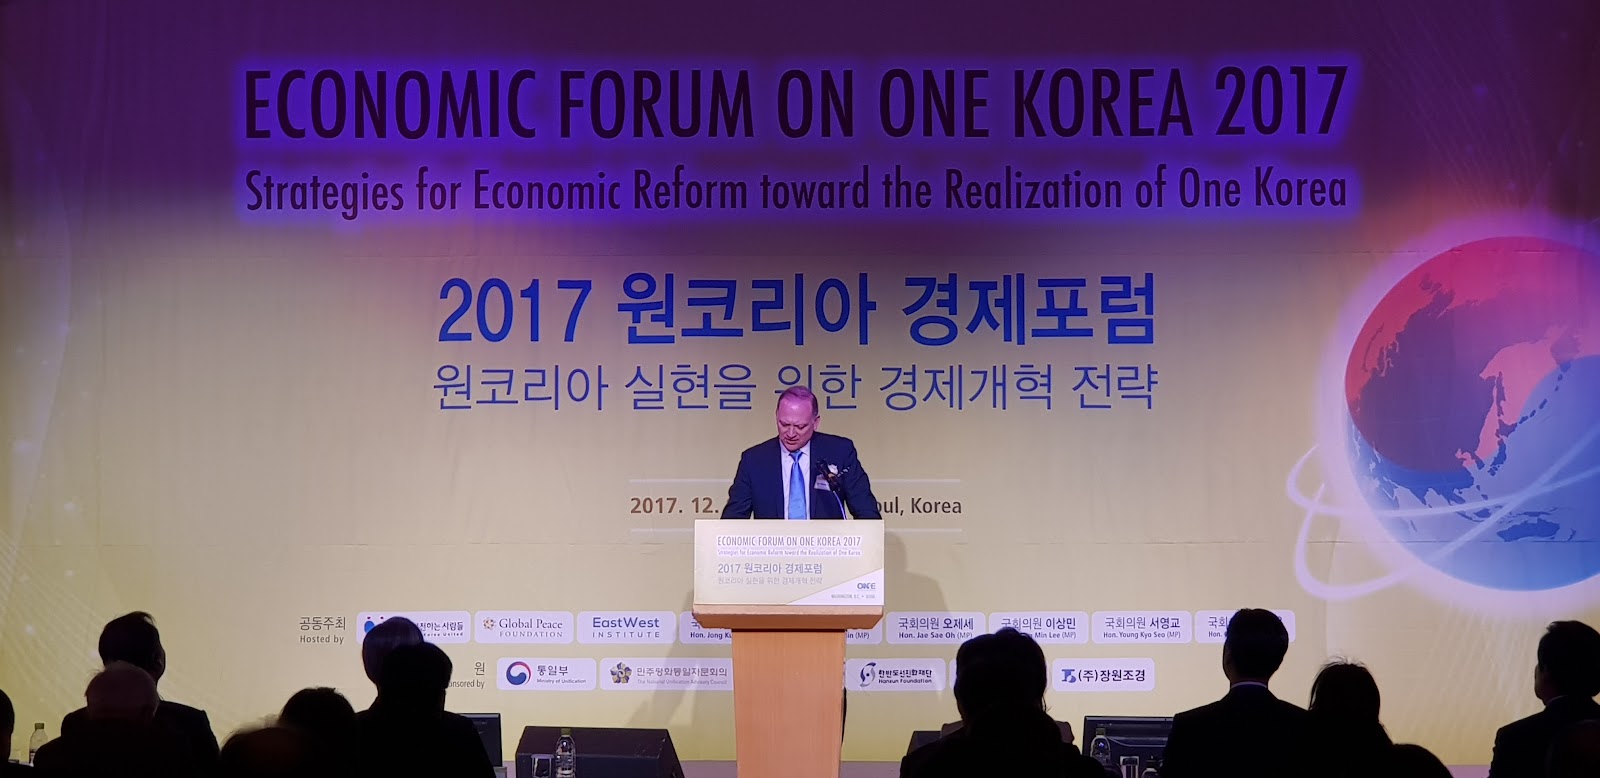 Dr. Parker addressees the economic forum in Seoul, Korea.